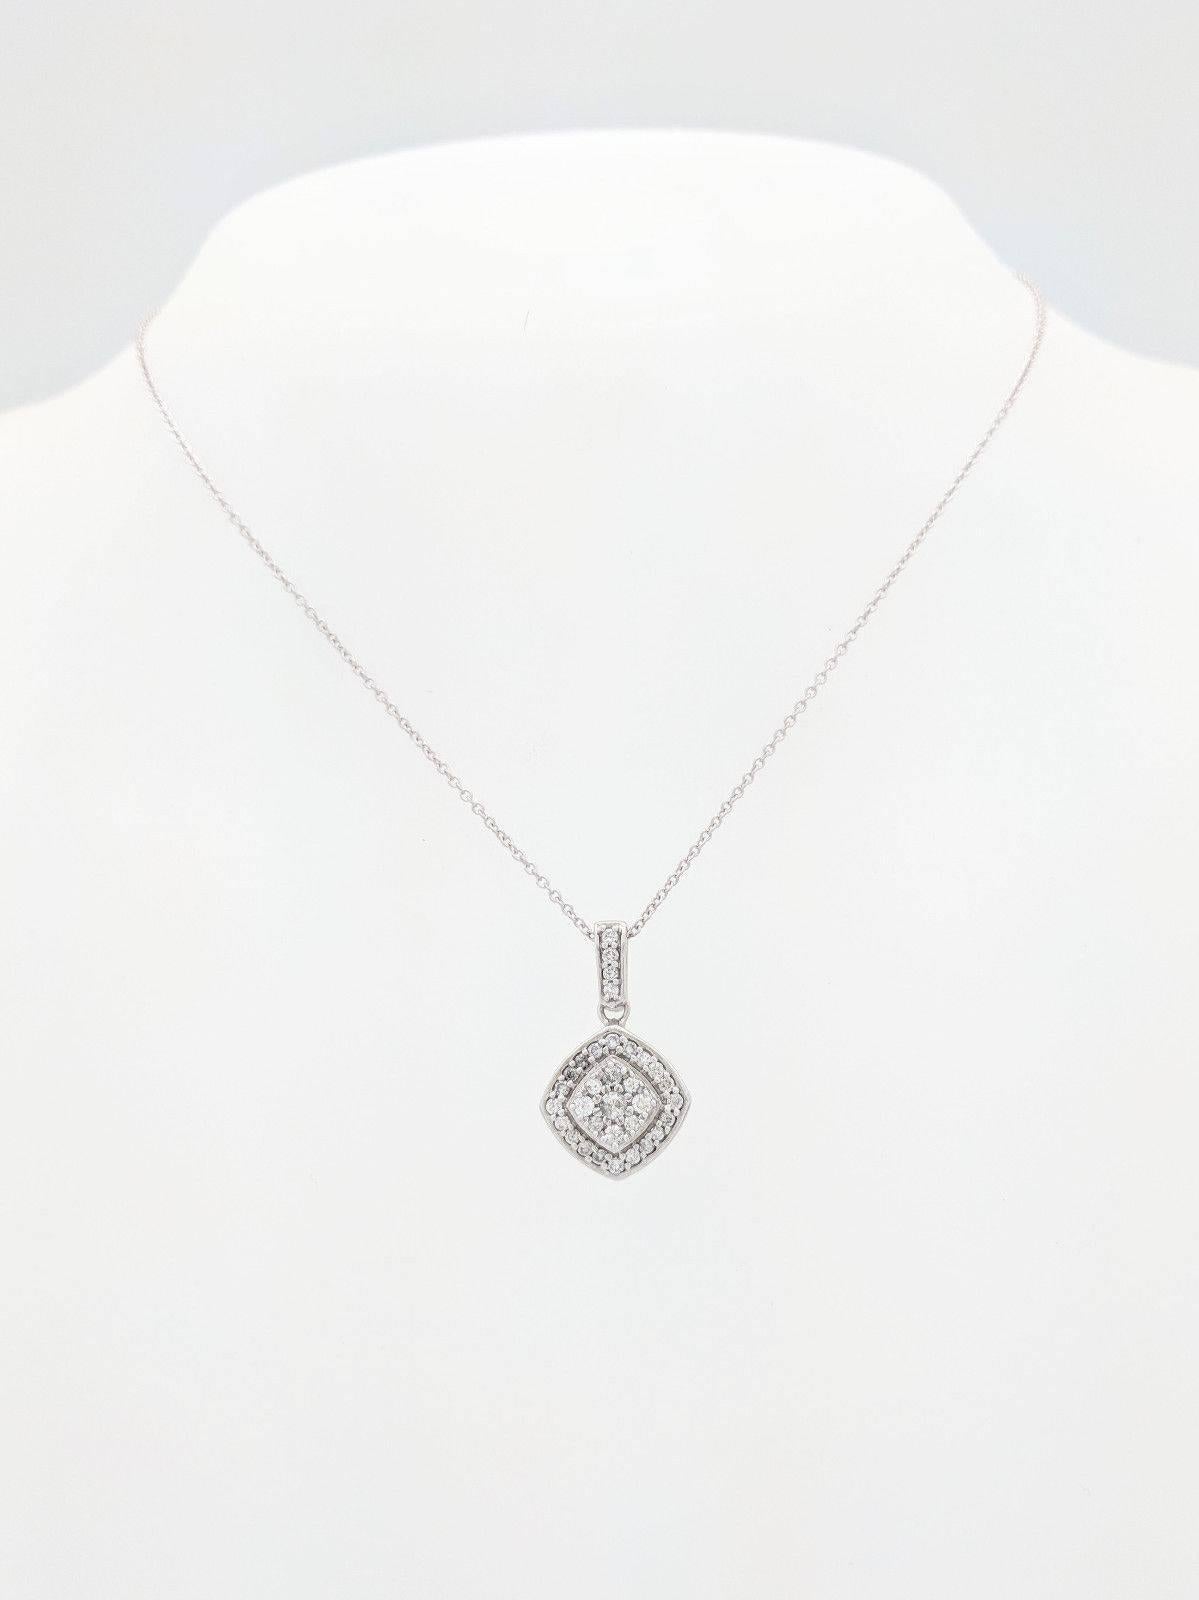  10K White Gold Diamond Cluster Pendant/Necklace 16